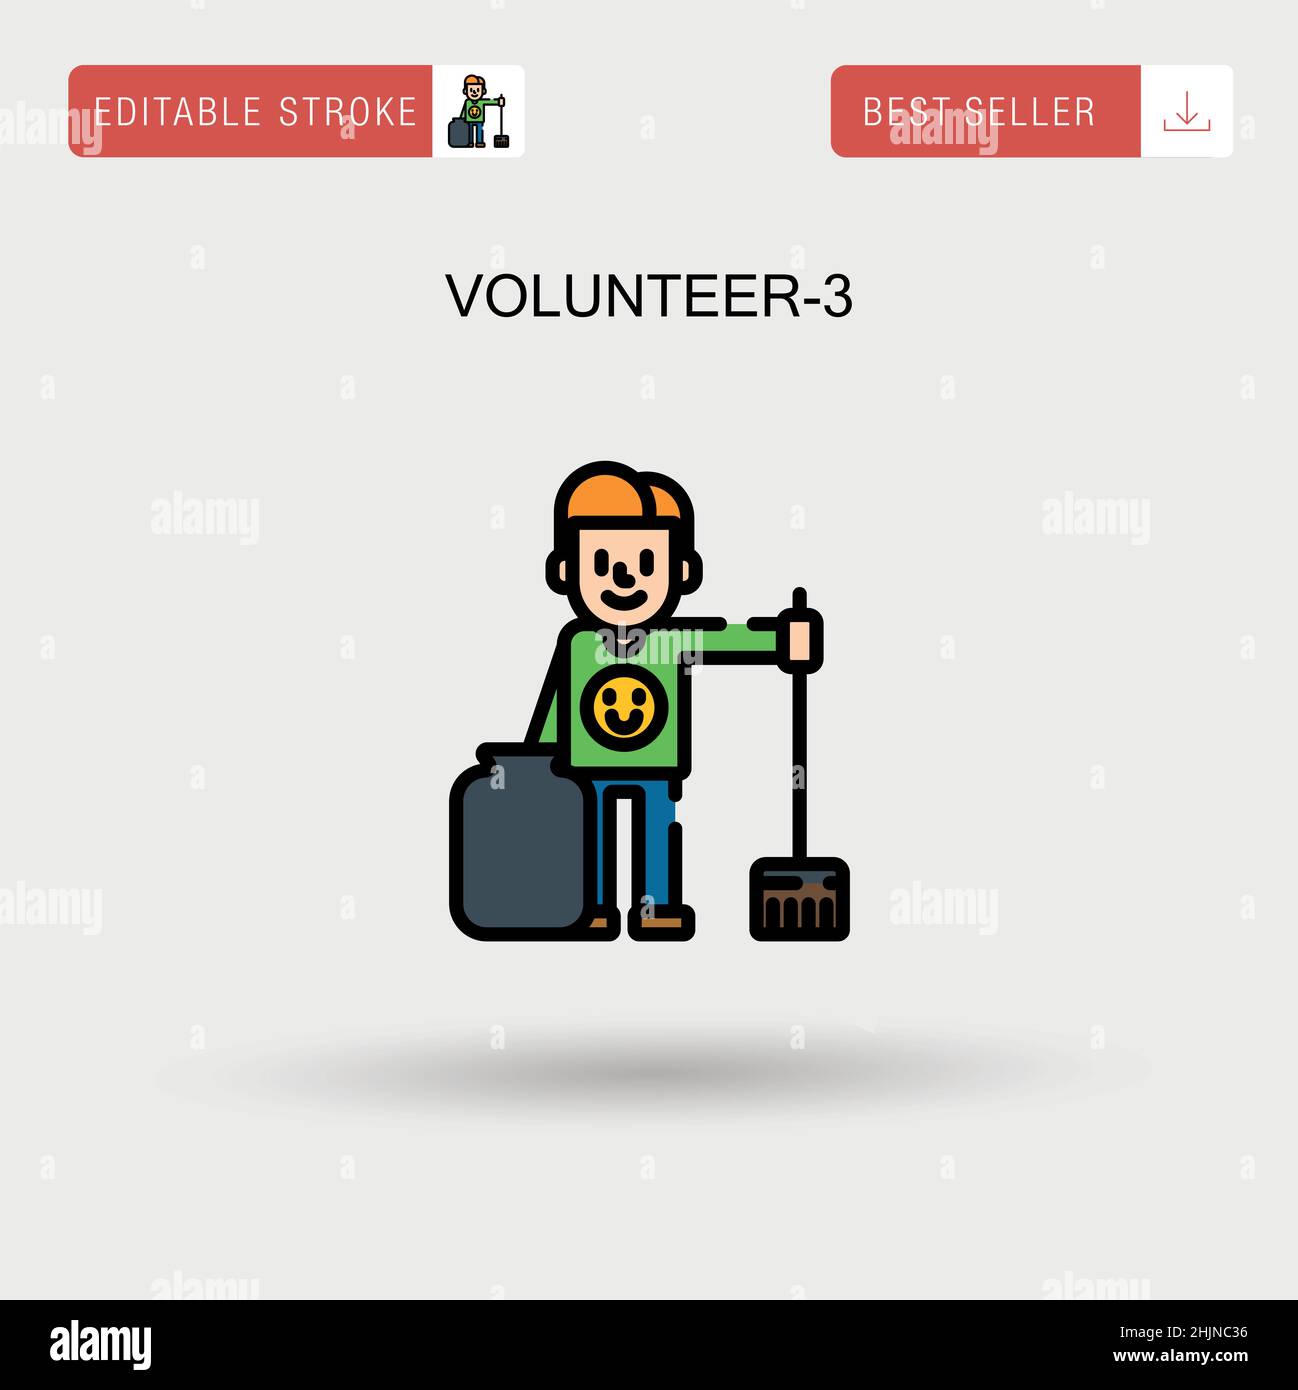 Volunteer-3 einfaches Vektorsymbol. Stock Vektor